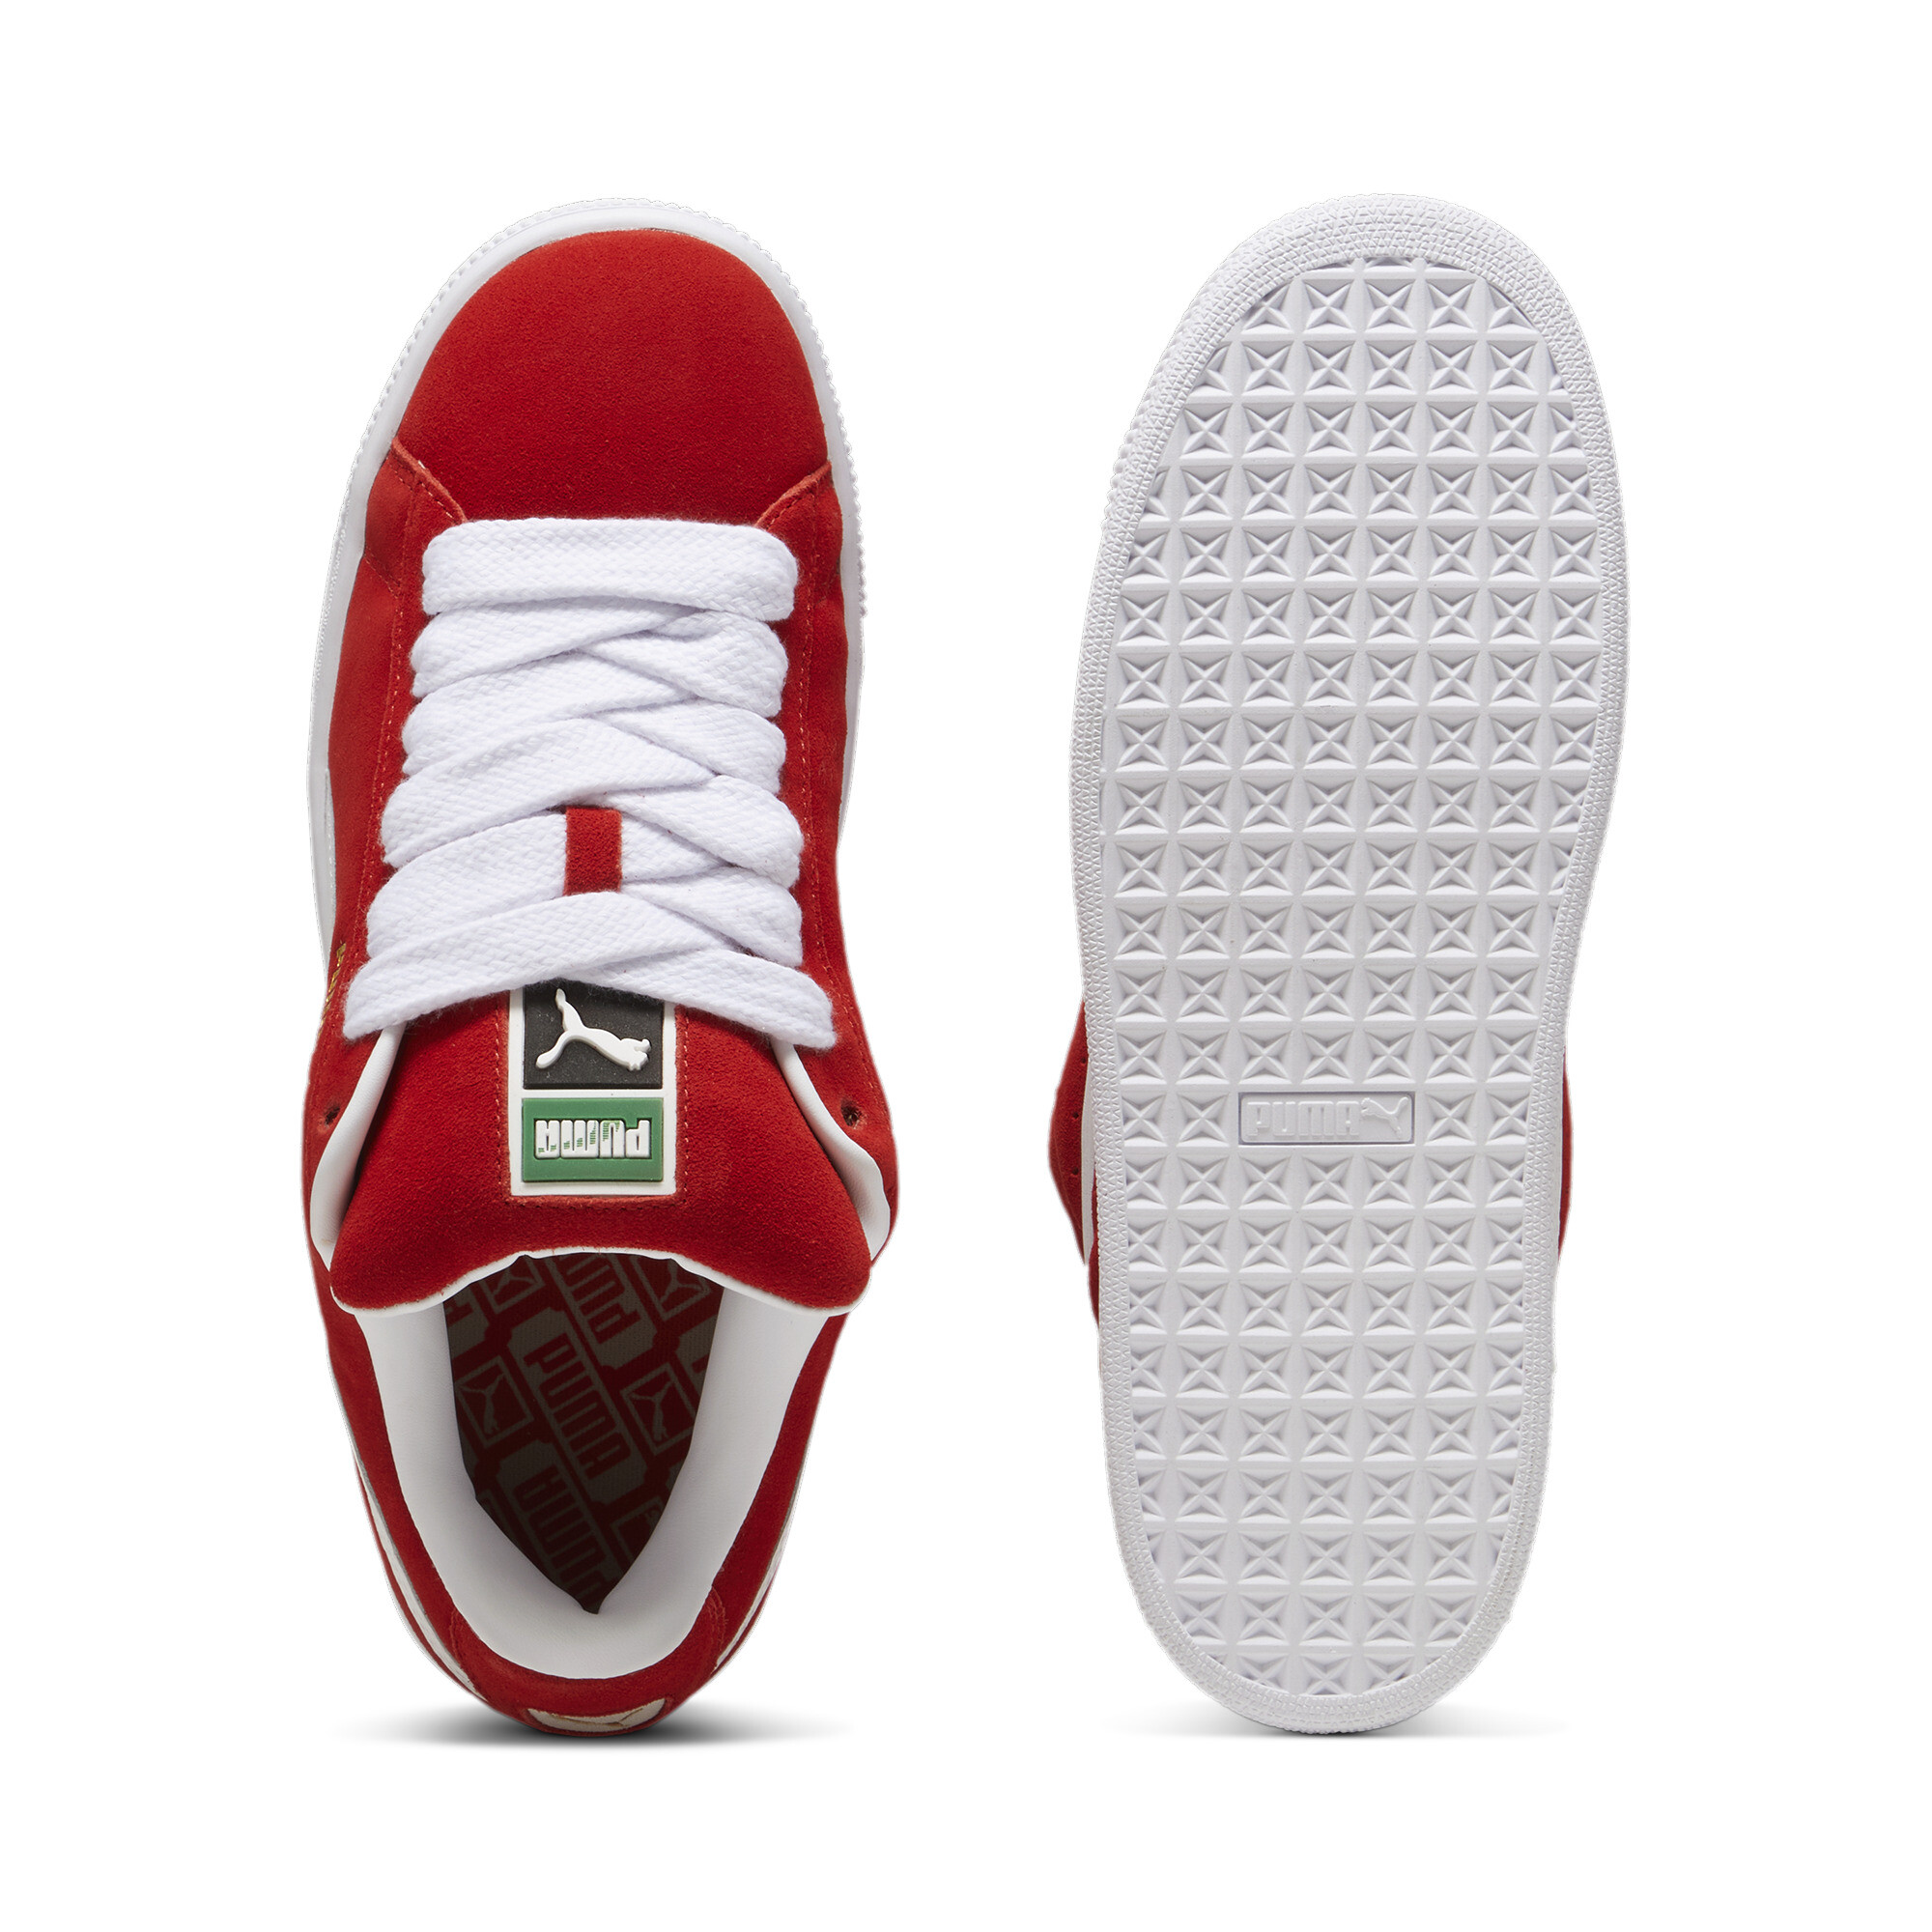 Unisex PUMA Suede XL Sneakers In Red, Size EU 40